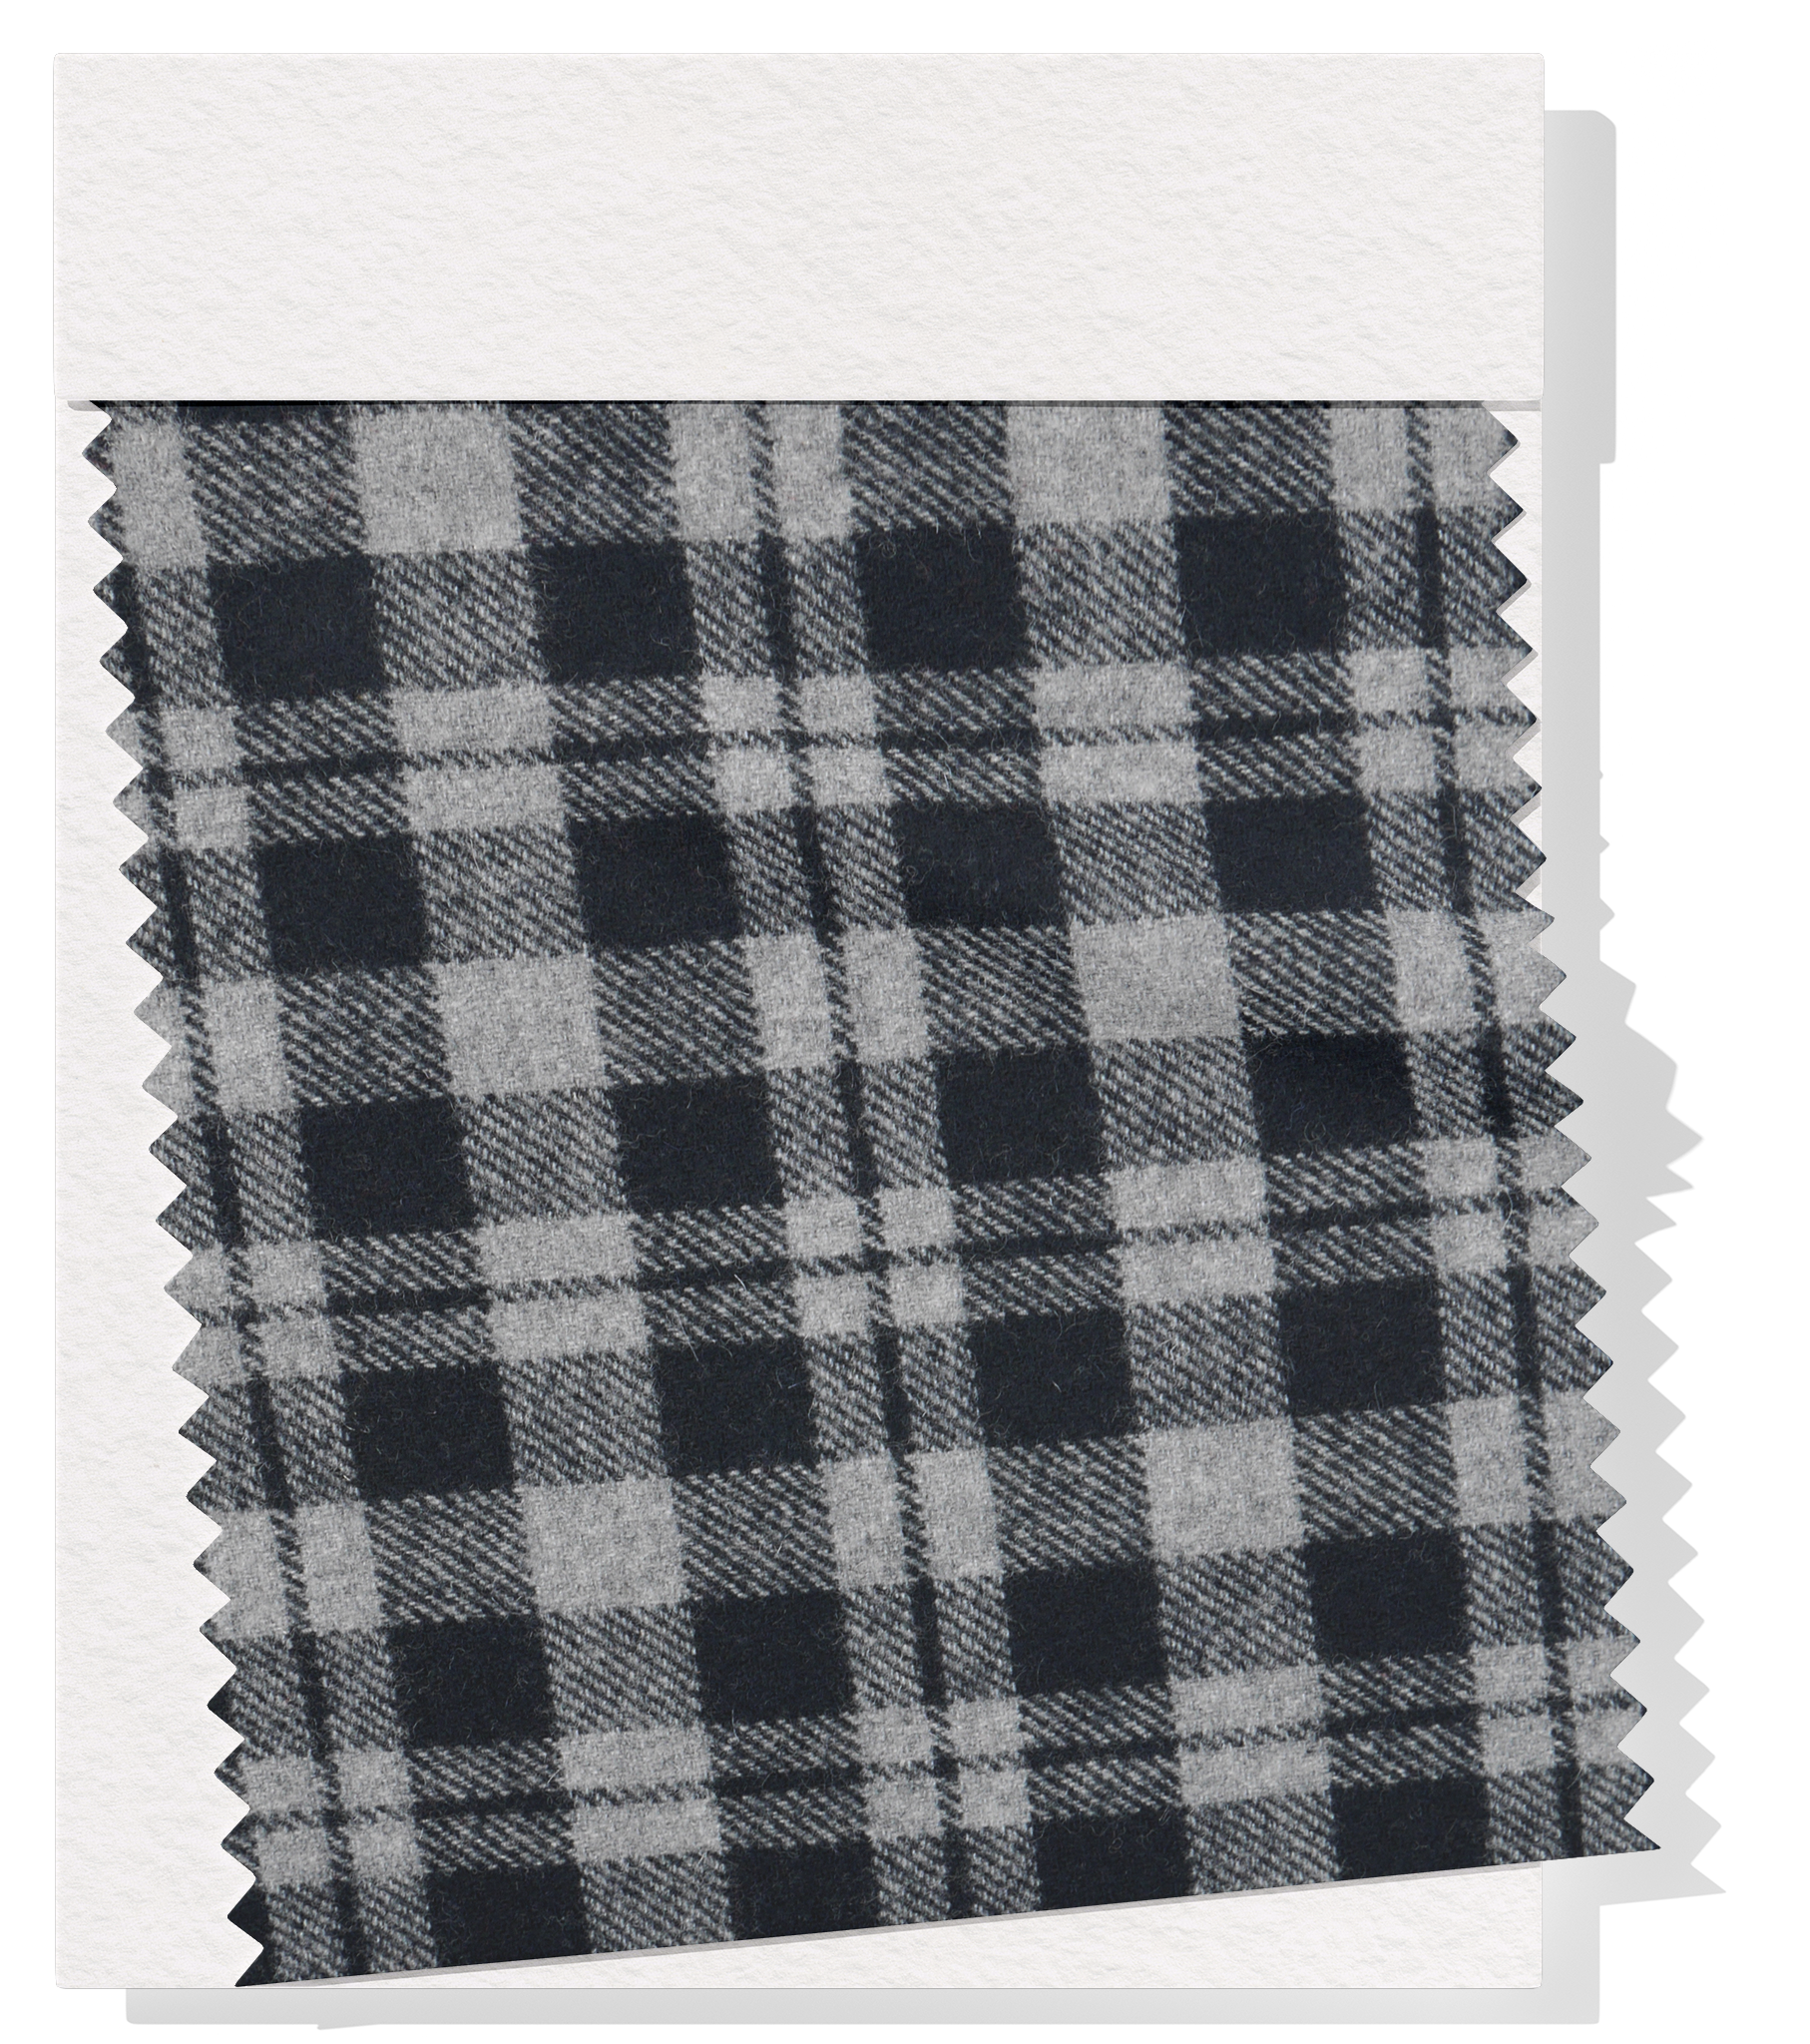 Checked Wool $18.00p/m - Black & Grey (WC4)